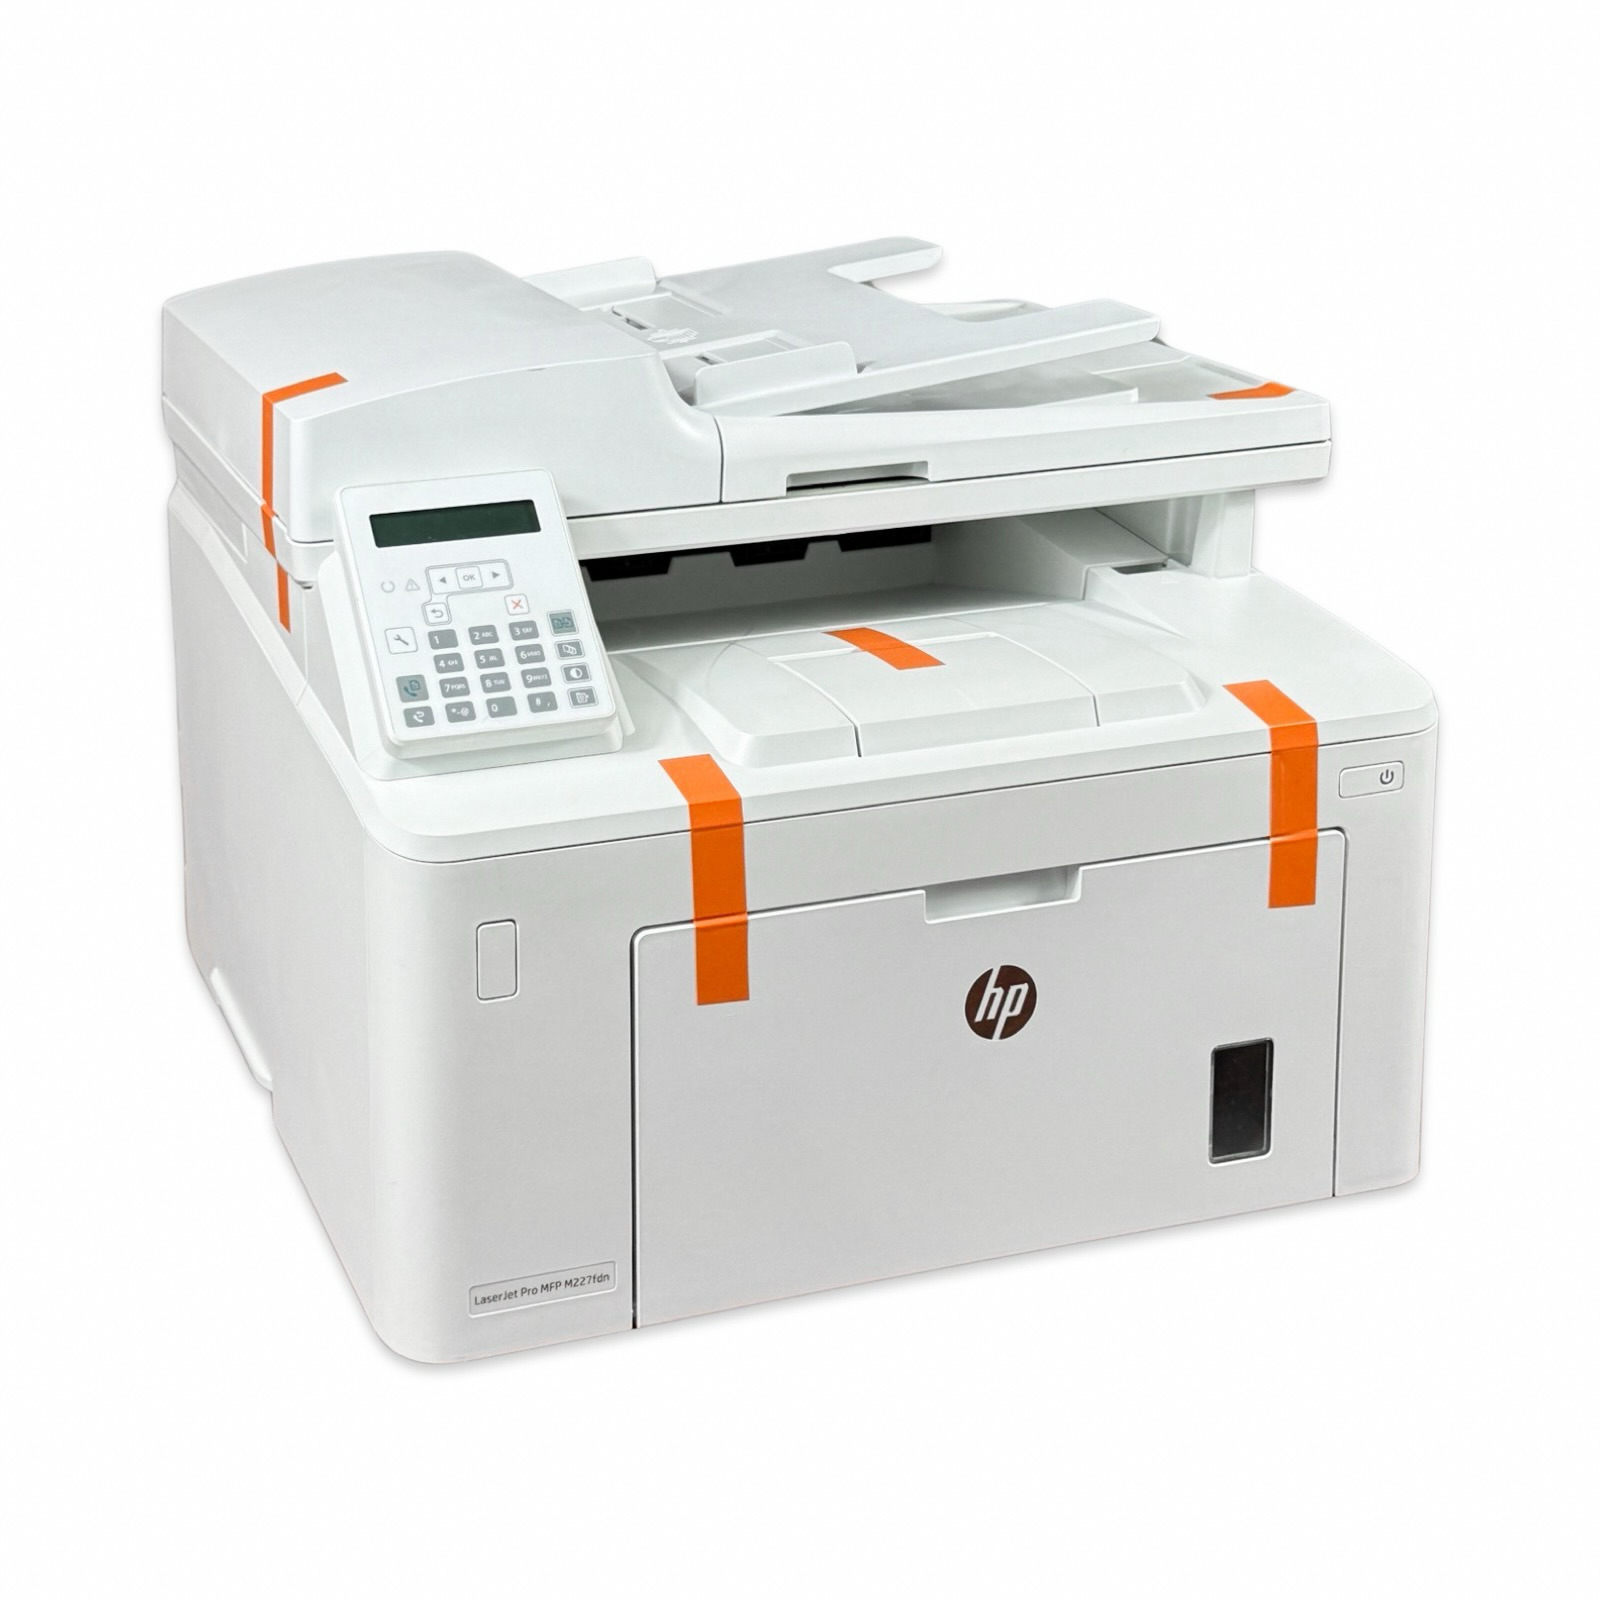 HP LaserJet Pro MFP M227fdn All-In-One Laser Printer G3Q79A